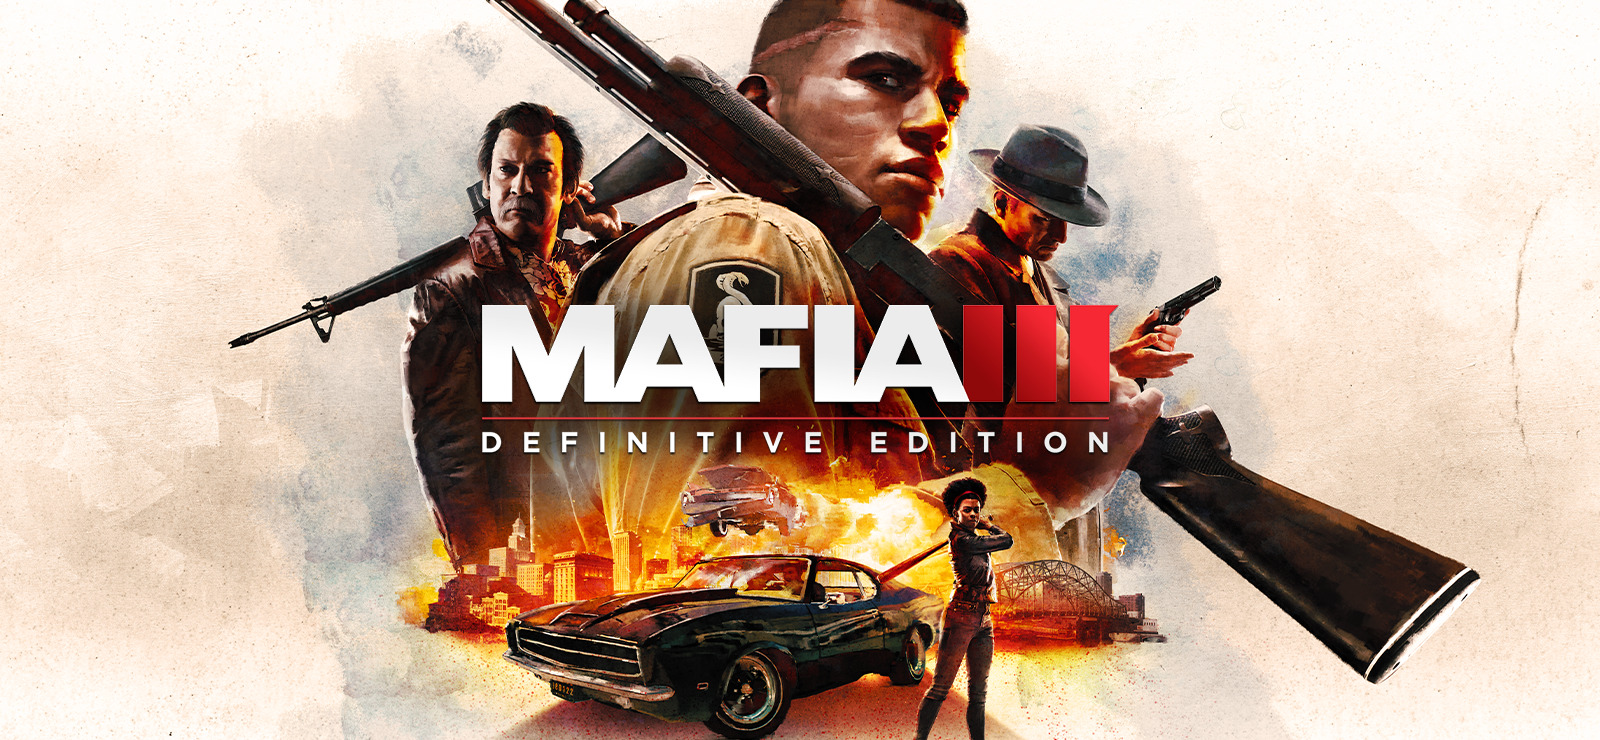 Mafia III: Edition on GOG.com